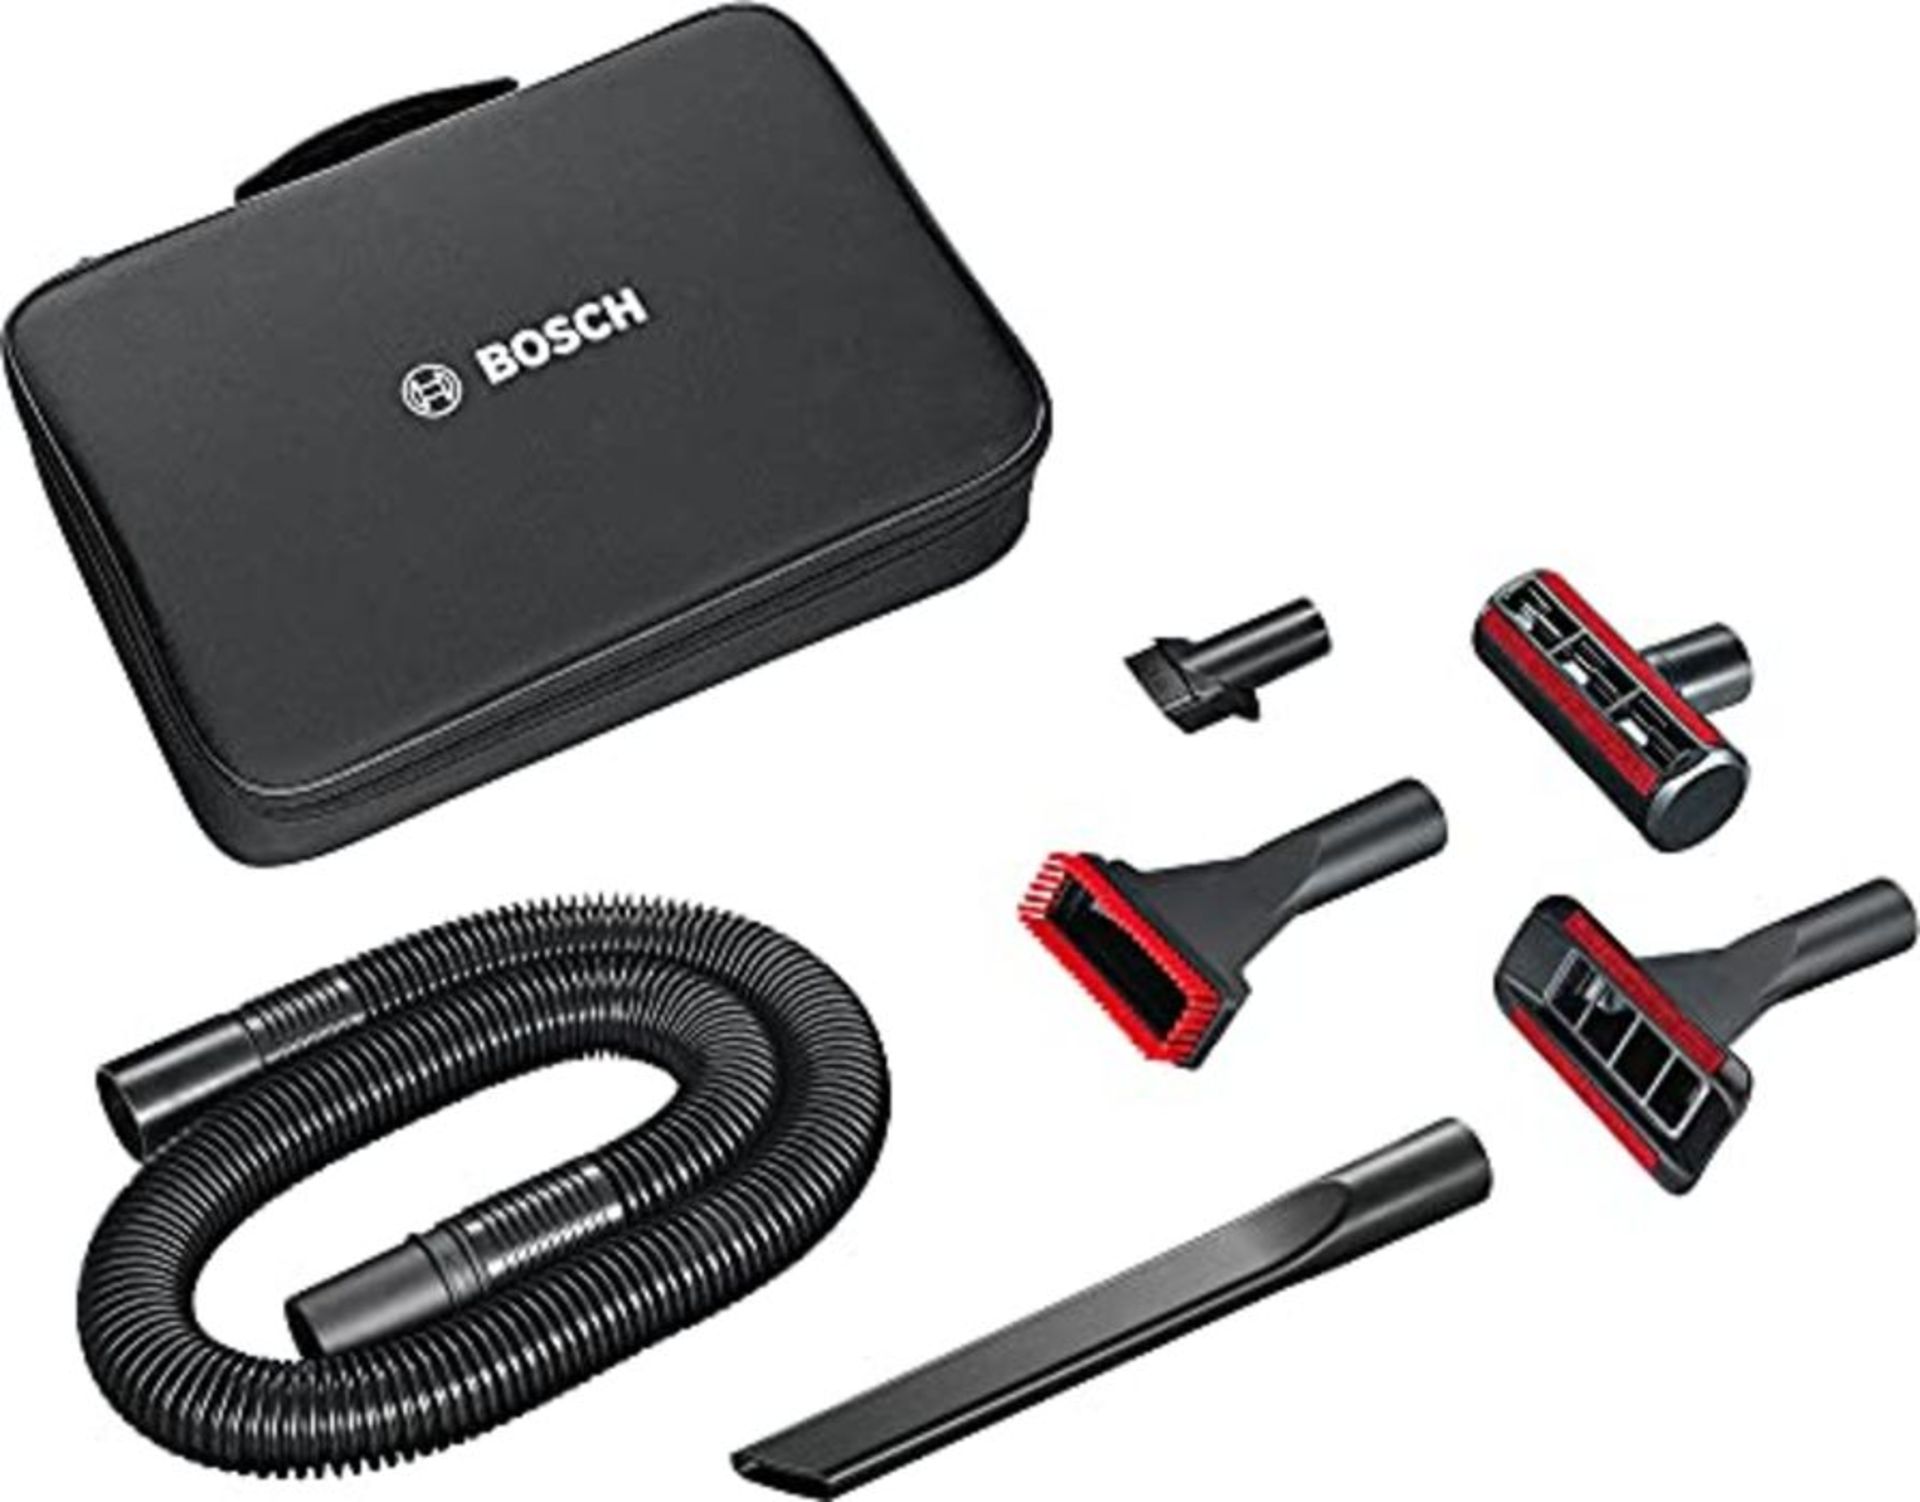 Bosch Hausgeräte BHZTKIT1 Accessory Set for Athlet Wireless Handheld Vacuum Cleaner,